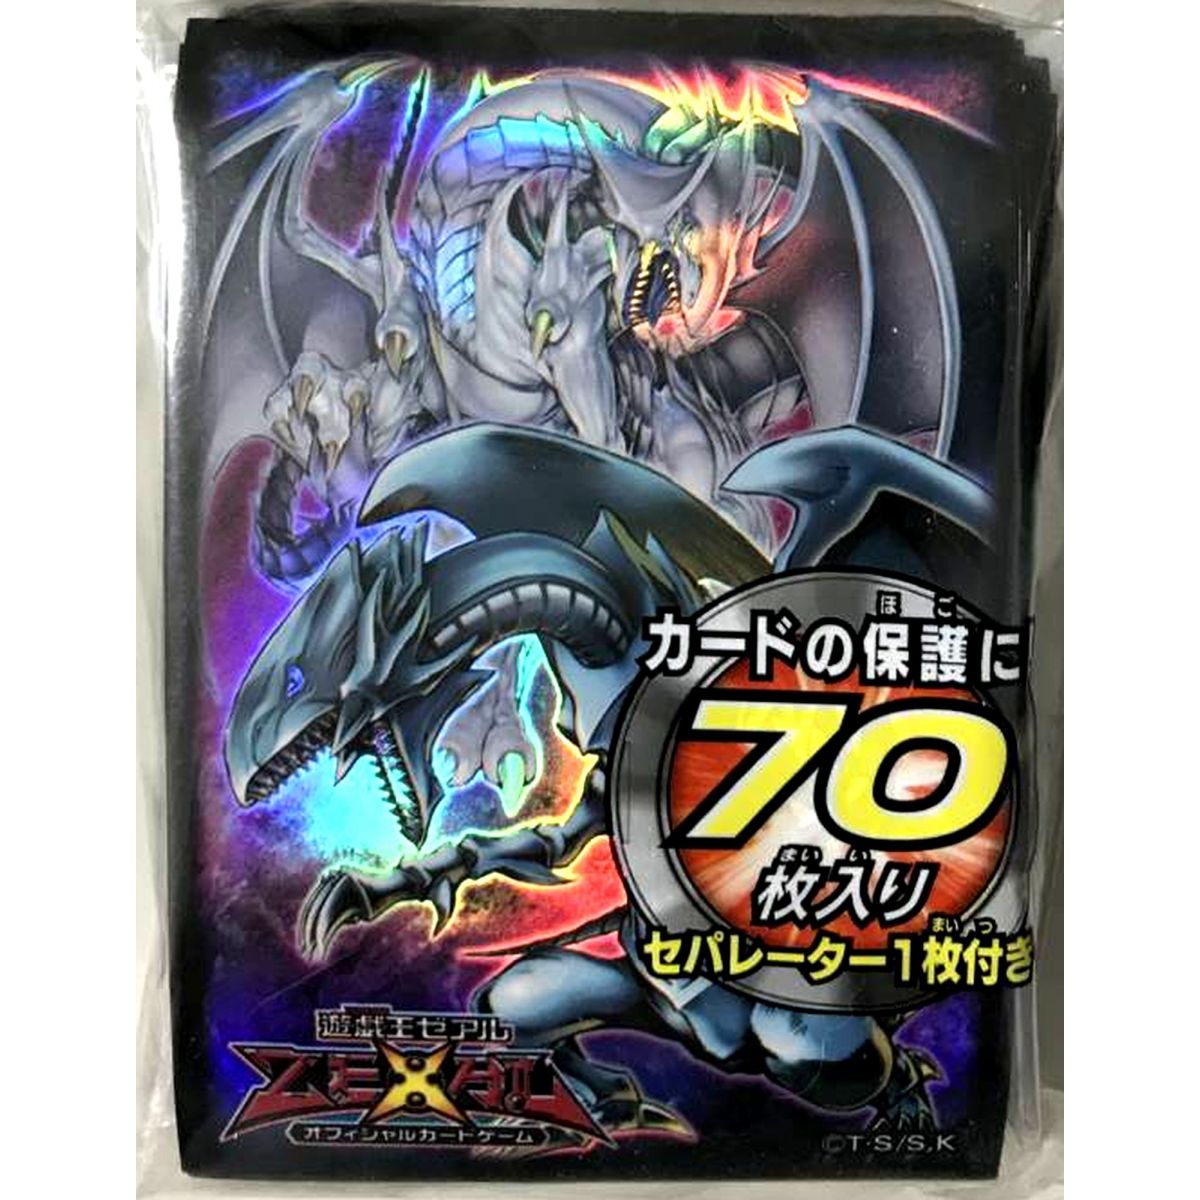 Item Yu Gi Oh! - Card Sleeves - Double Dragon (55) - OCG